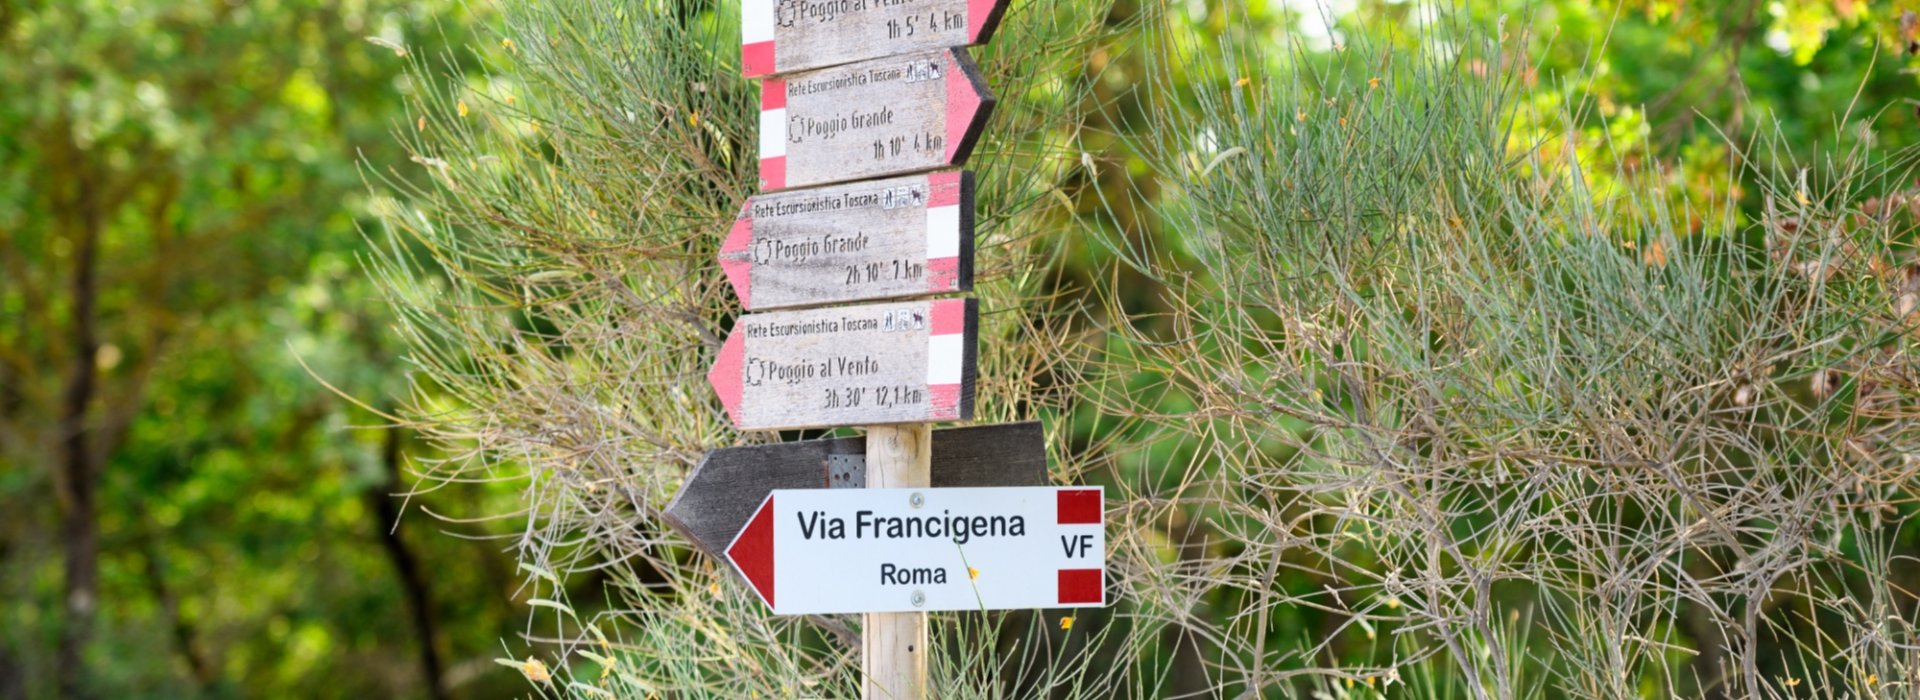 Trekking lungo la Via Francigena tra San Quirico d'Orcia e Radicofani